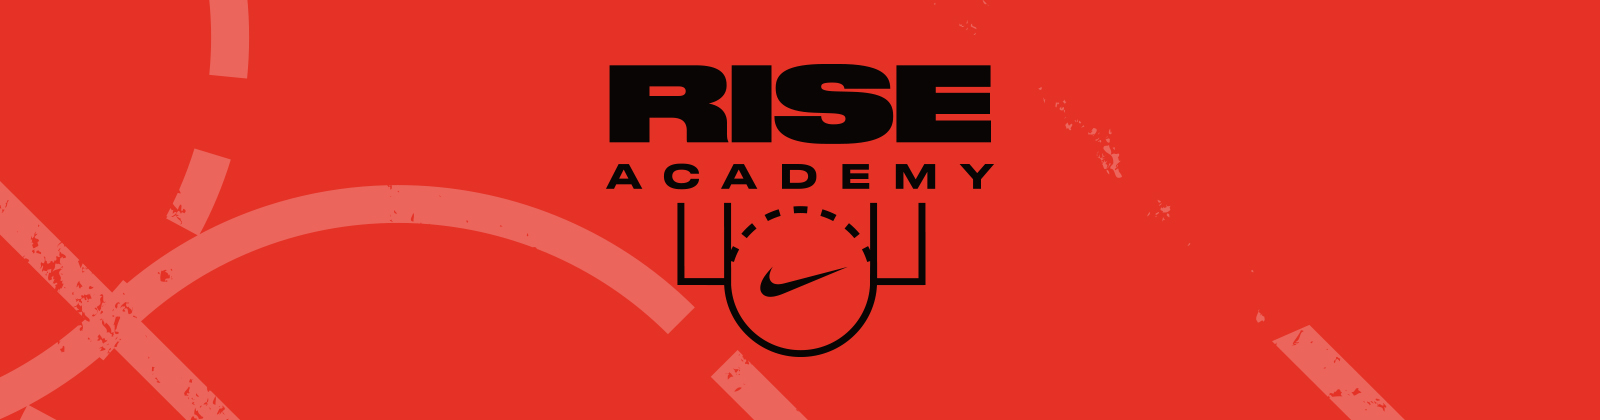 nike academy logo